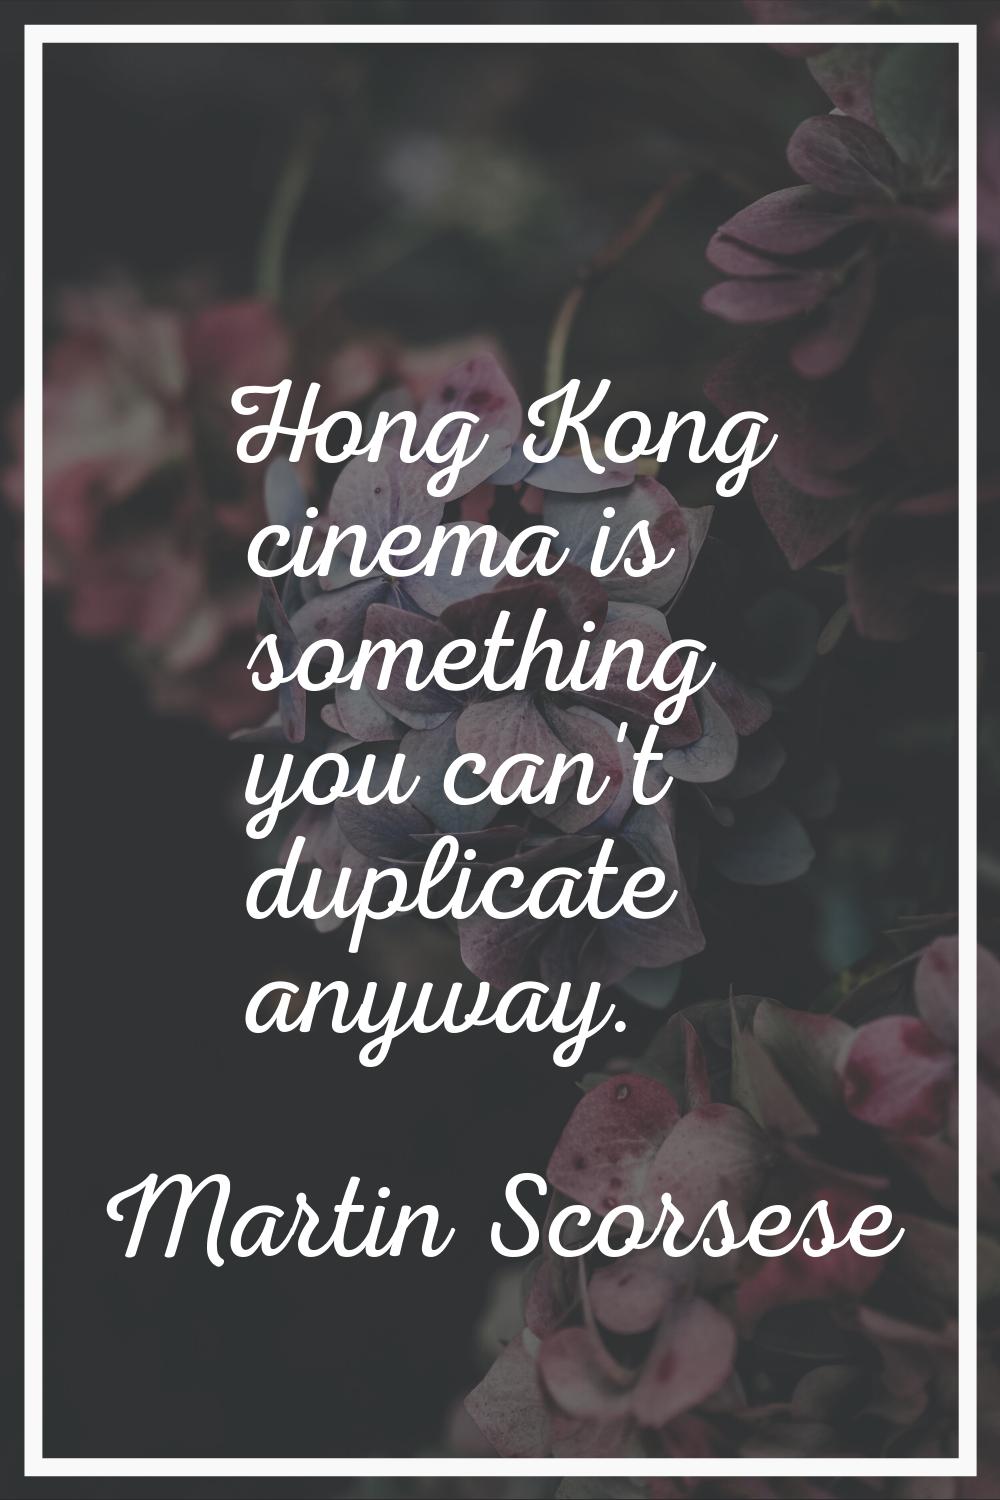 Hong Kong cinema is something you can't duplicate anyway.